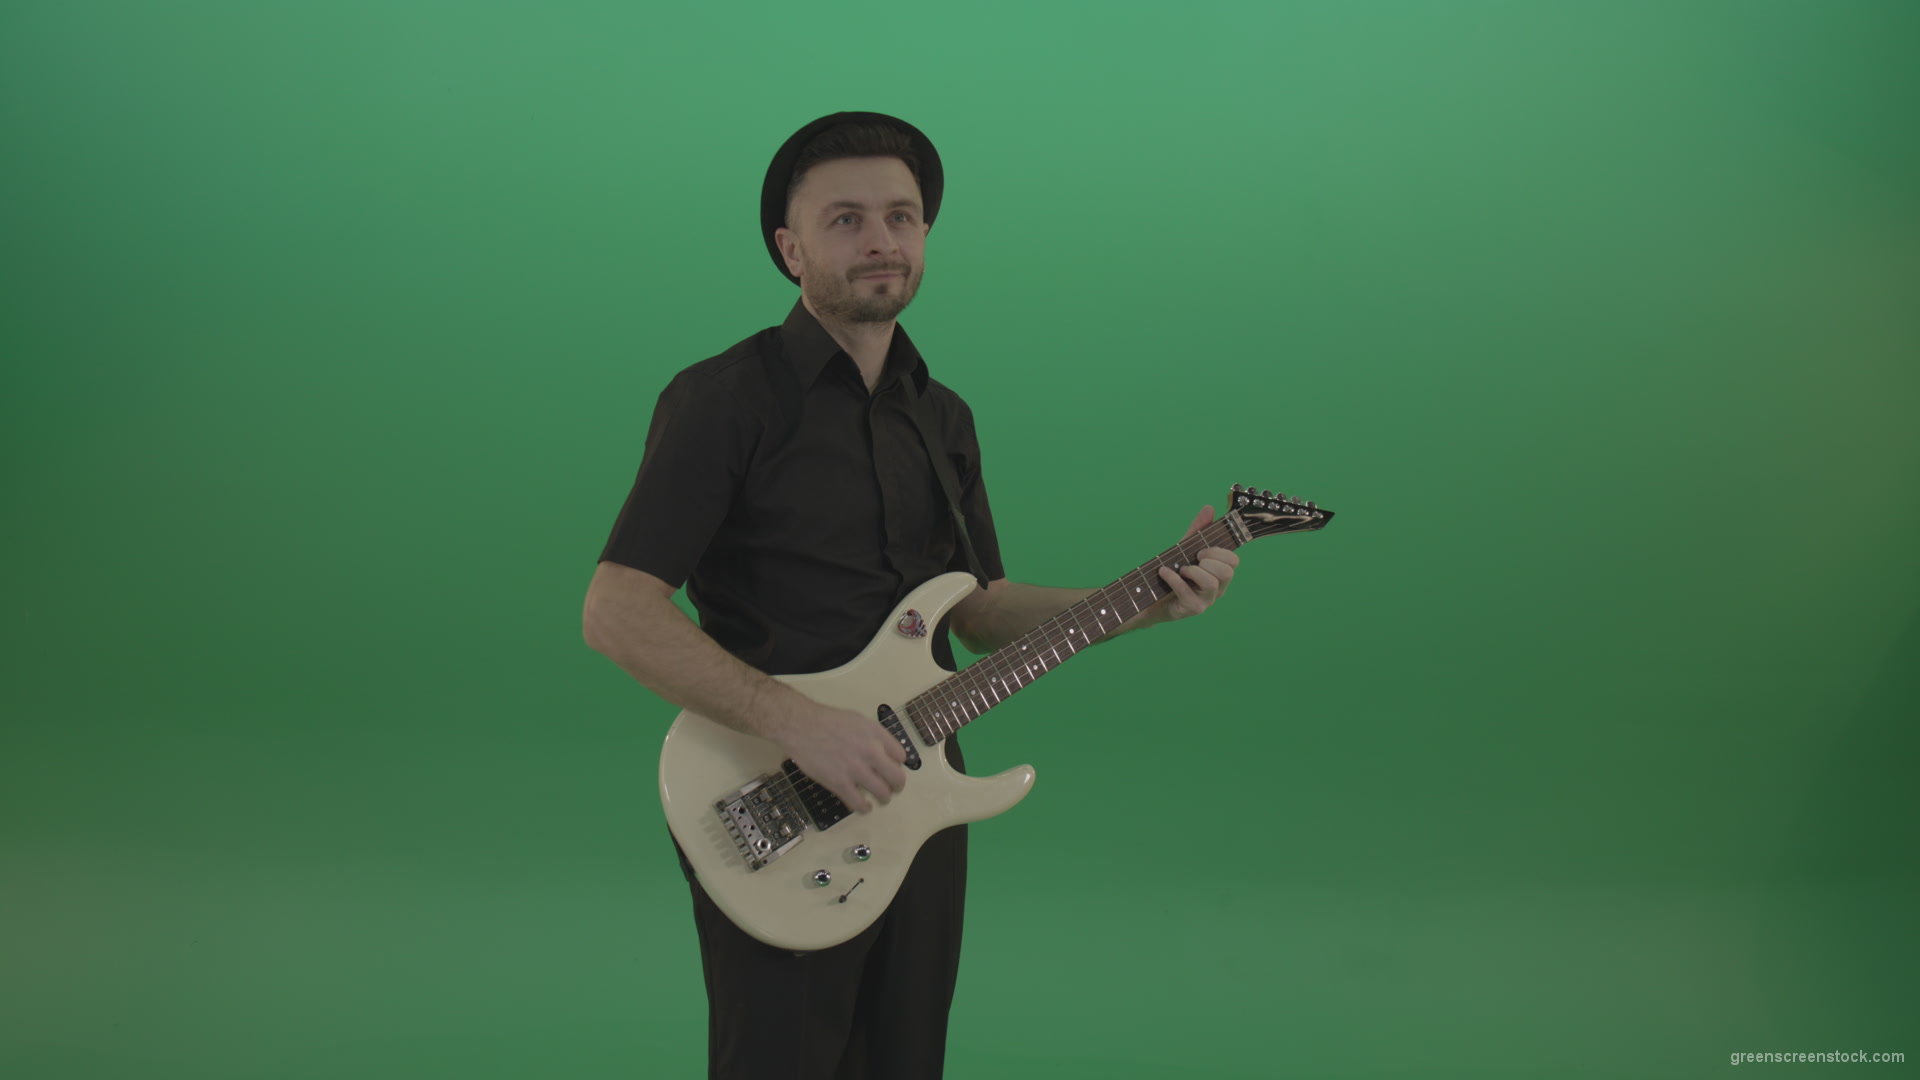 Man-in-black-playing-white-guitar-on-green-screen-1_005 Green Screen Stock